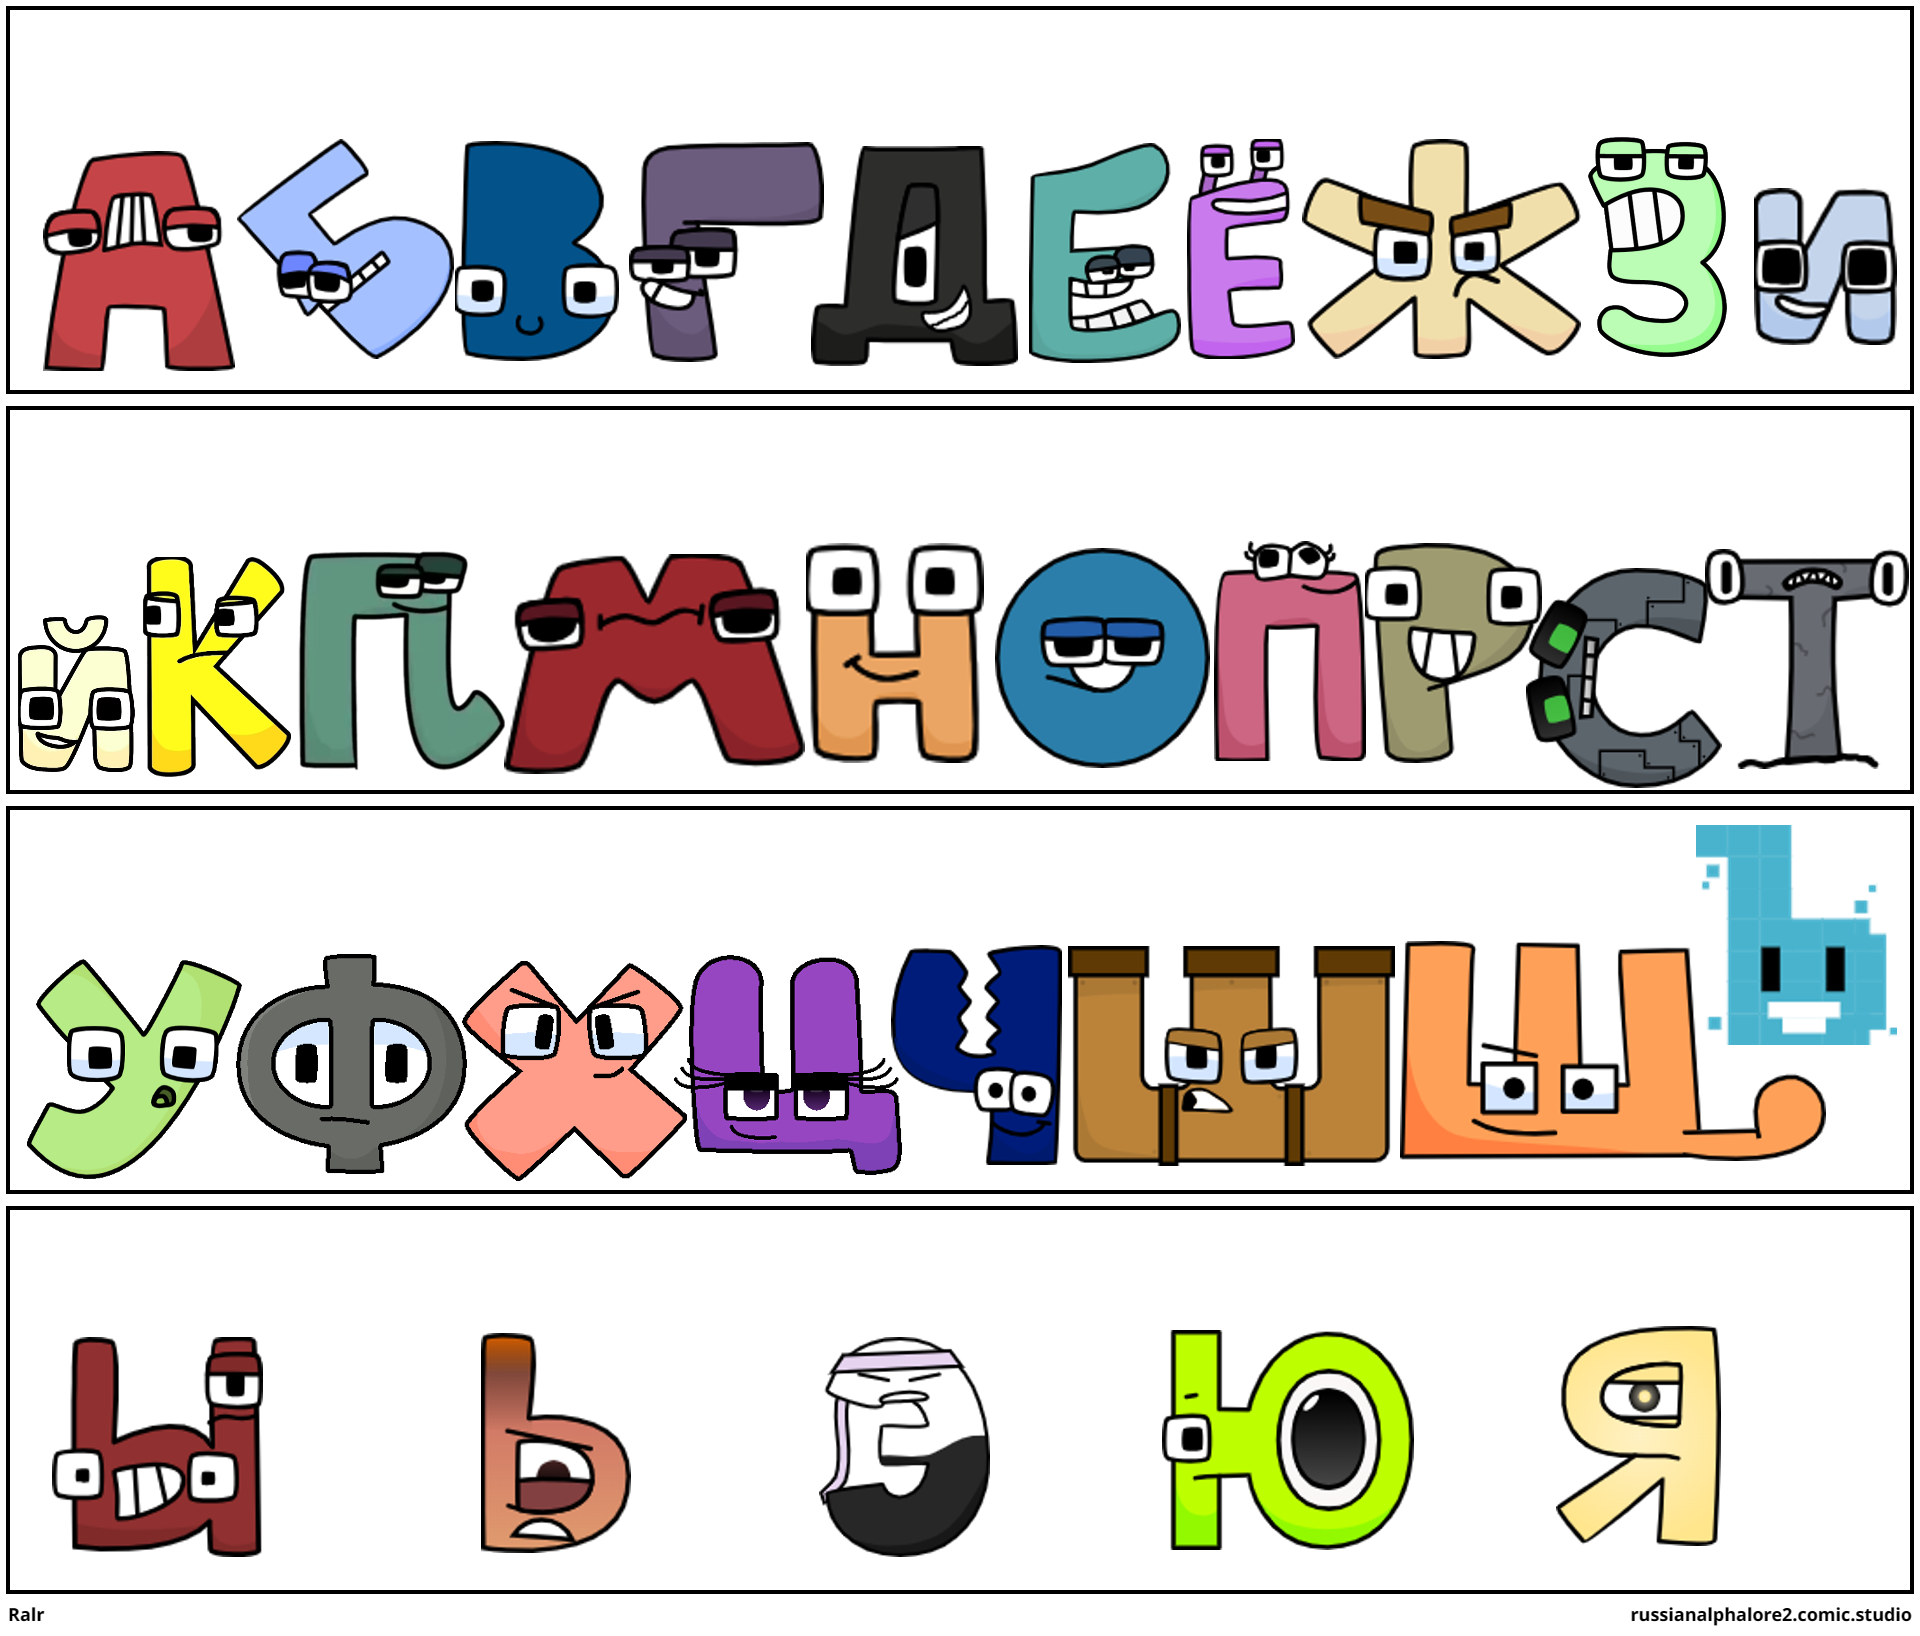 Mongolian alphabet lore (credit Pauloluigi) - Comic Studio